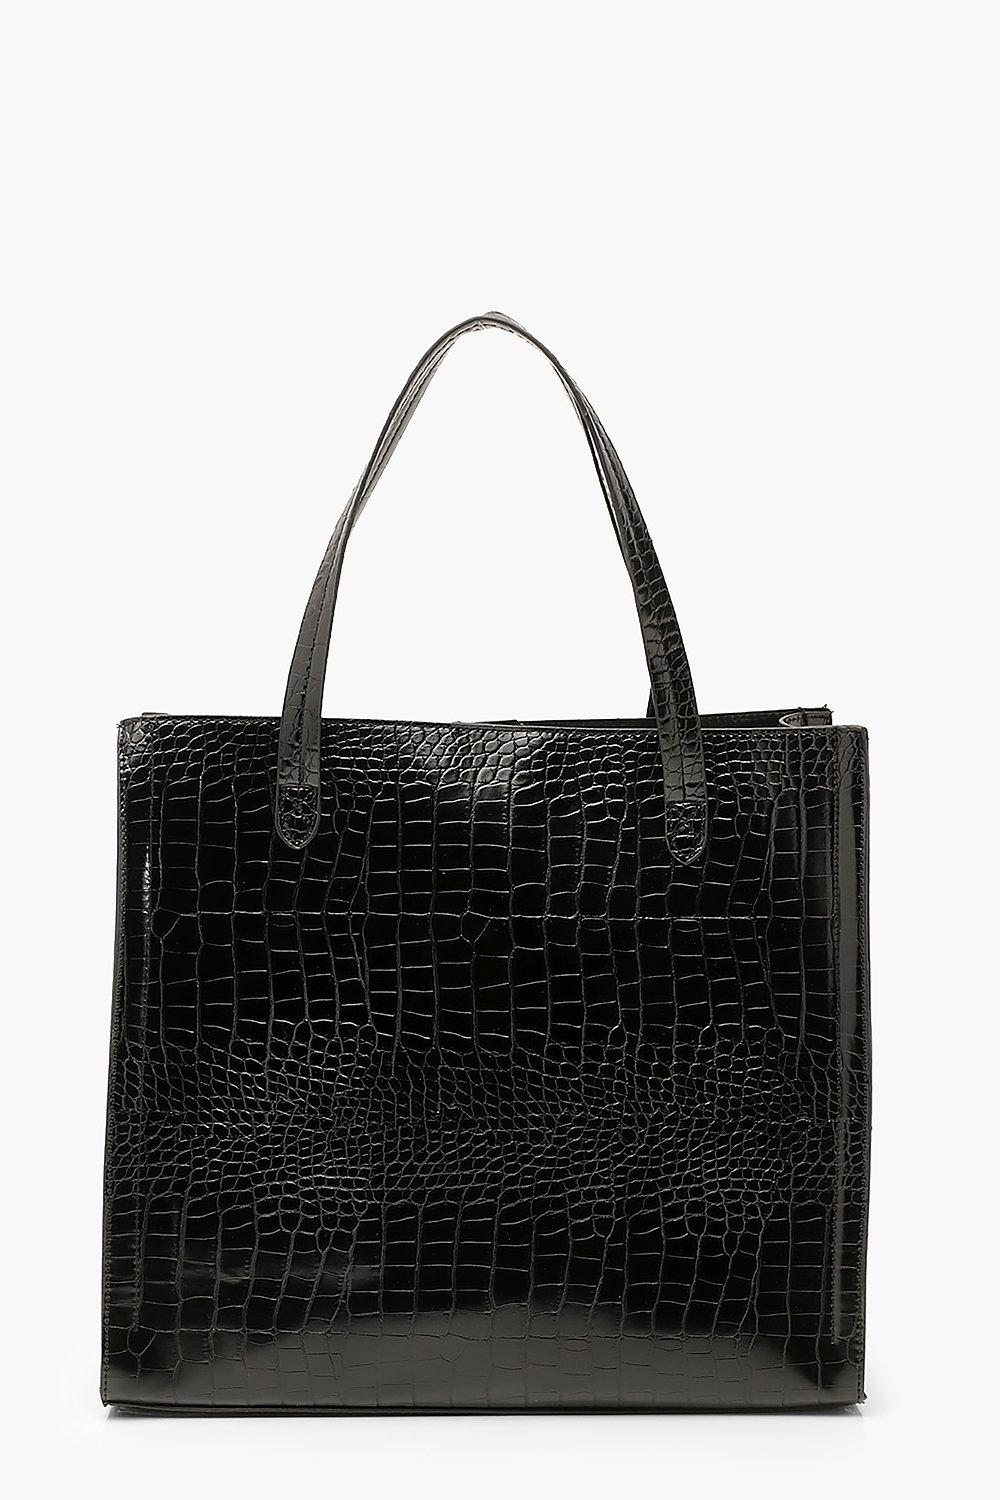 womens croc pu tote shopper bag - black - one size, black